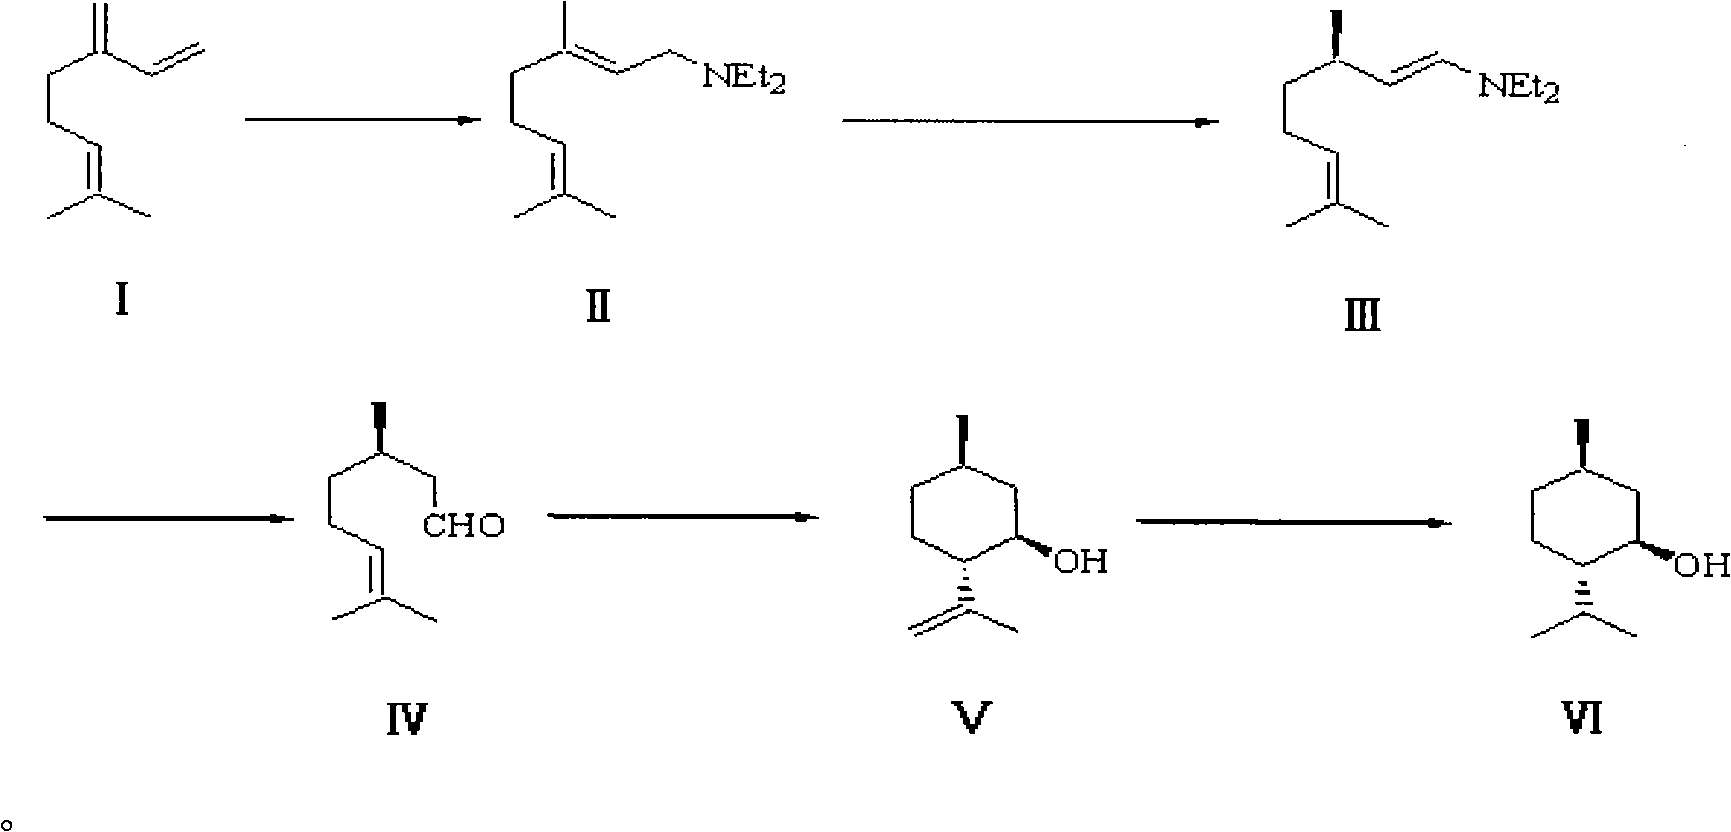 Method for synthesizing L-menthol